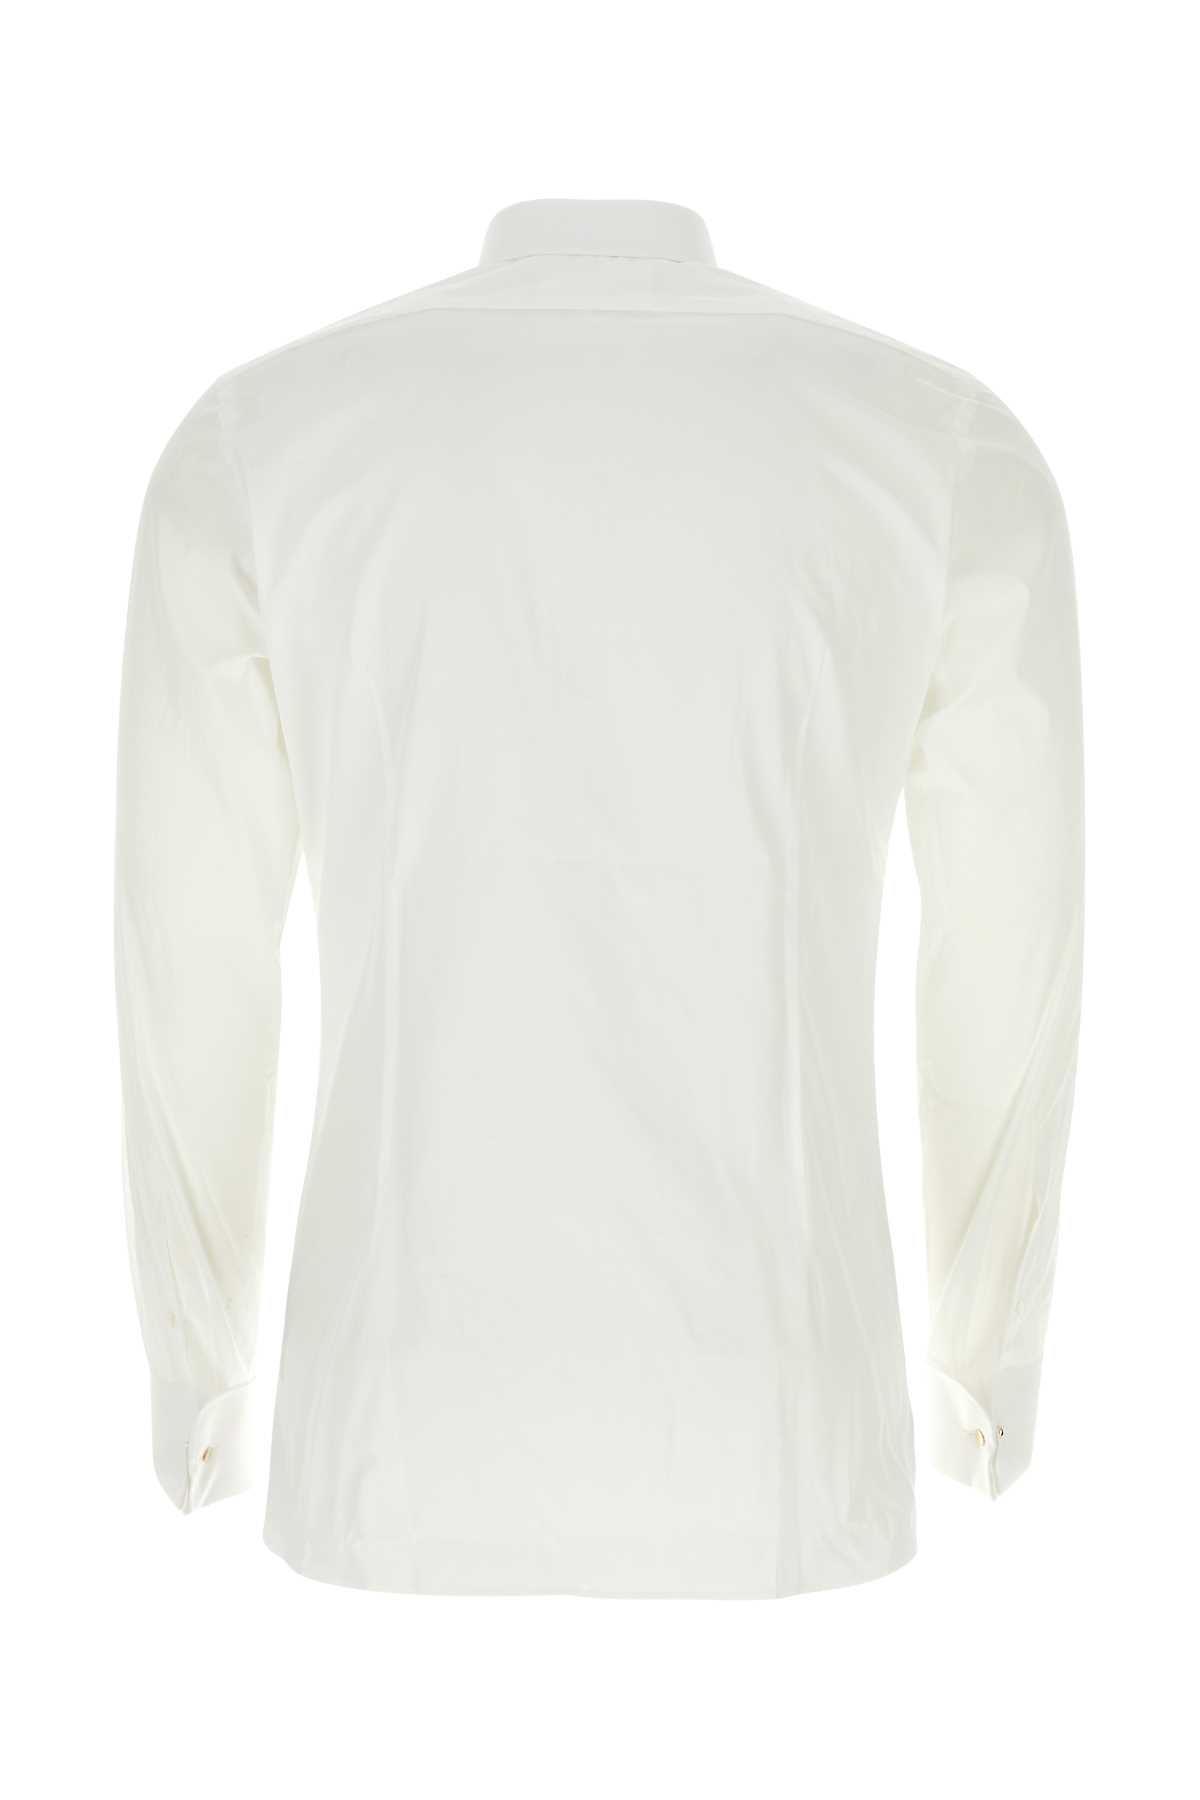 Tom Ford White Poplin Shirt In Opticalwhite